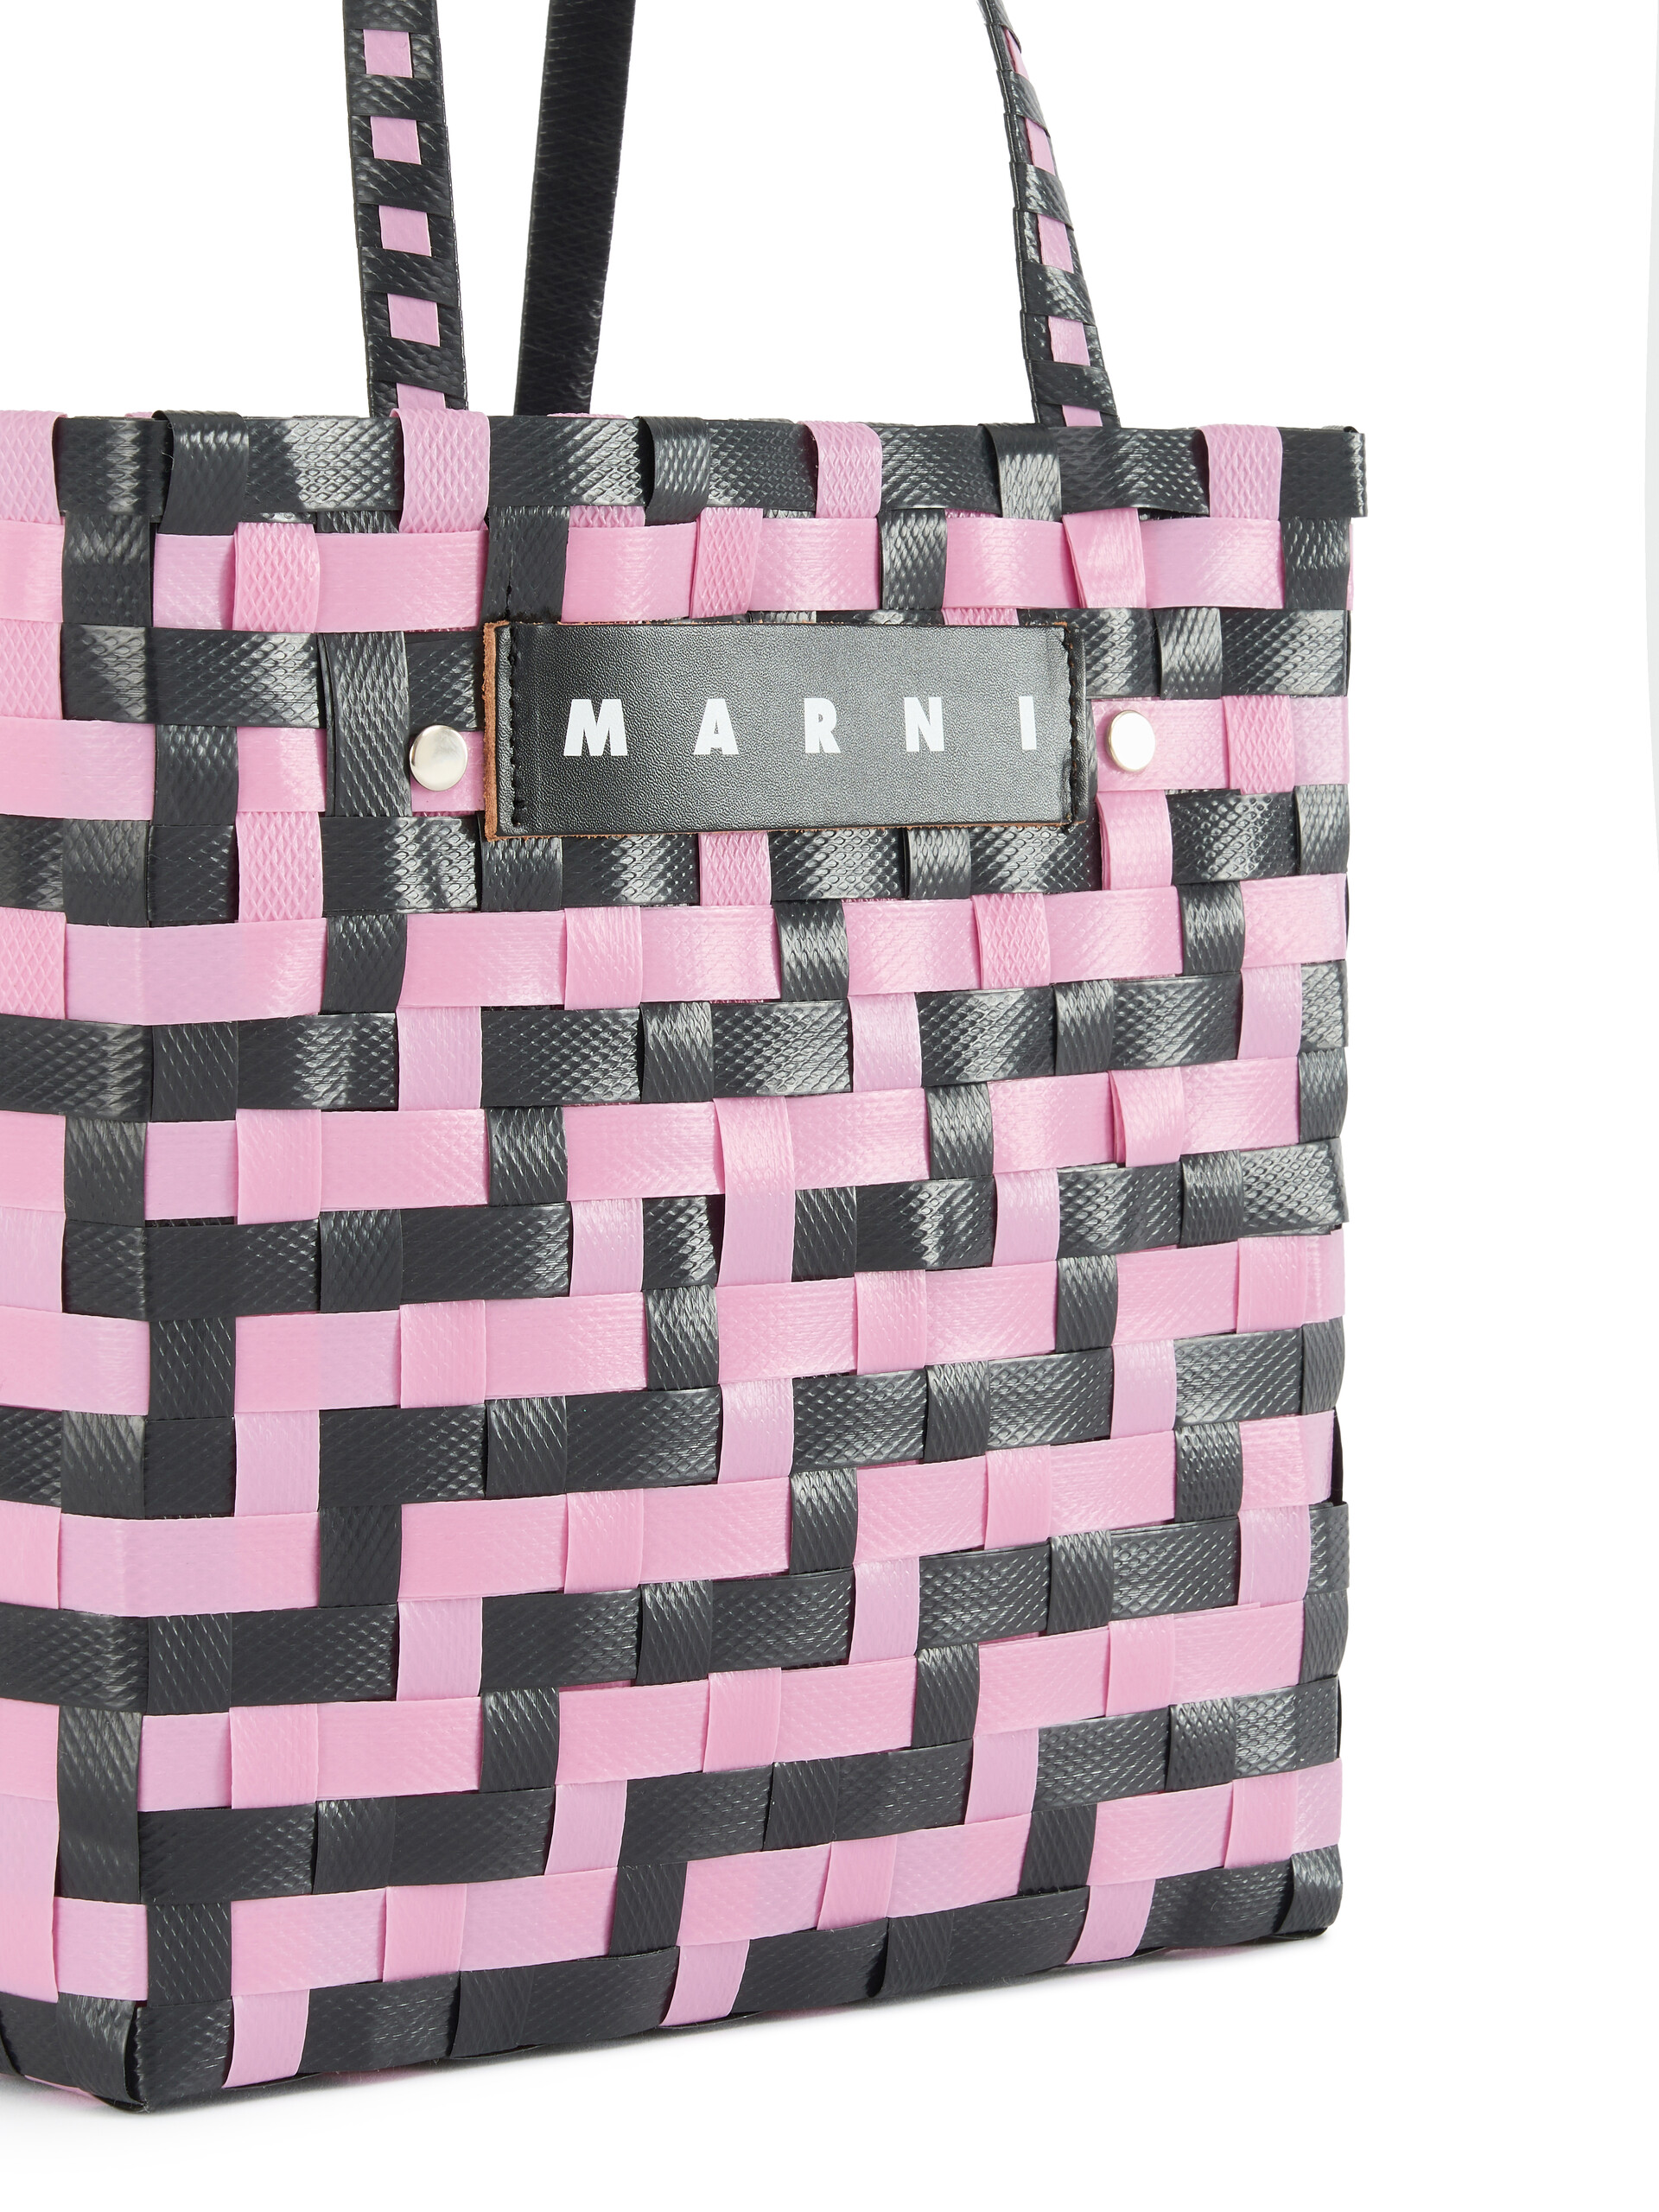 Multicolour MARNI MARKET MINI BASKET bag - Bags - Image 4